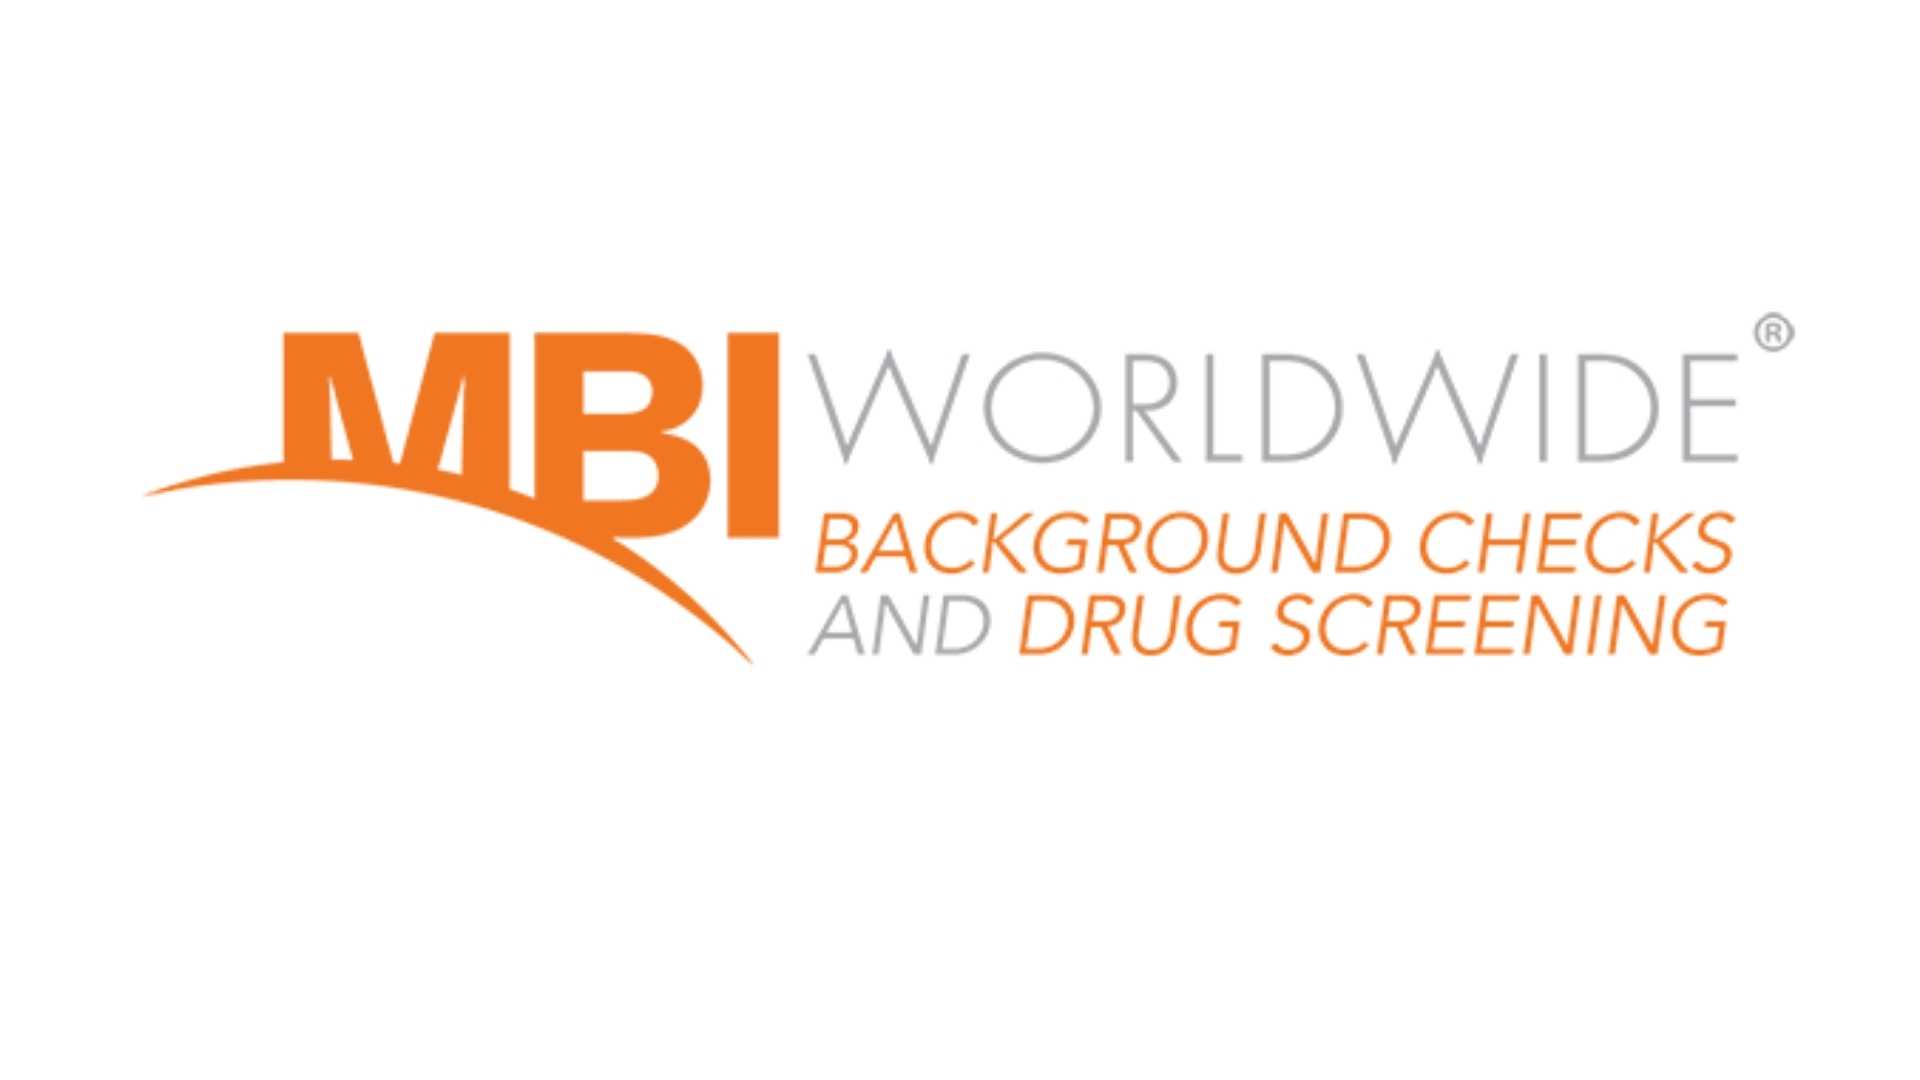 MBI Worldwide Integration